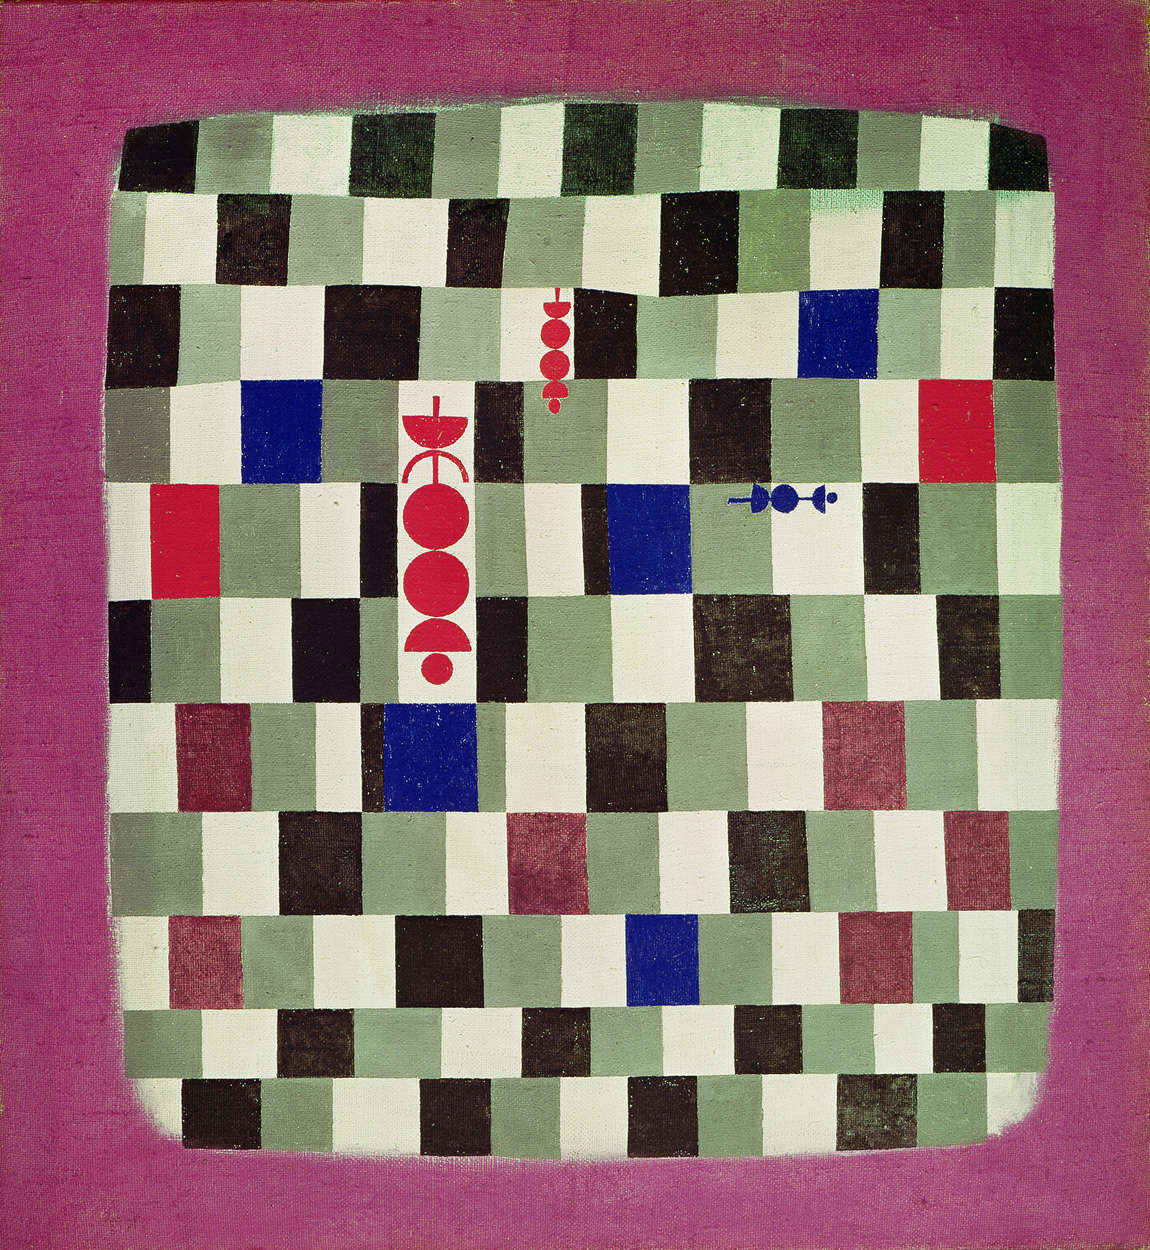             Papier peint panoramique "Überschach" de Paul Klee
        